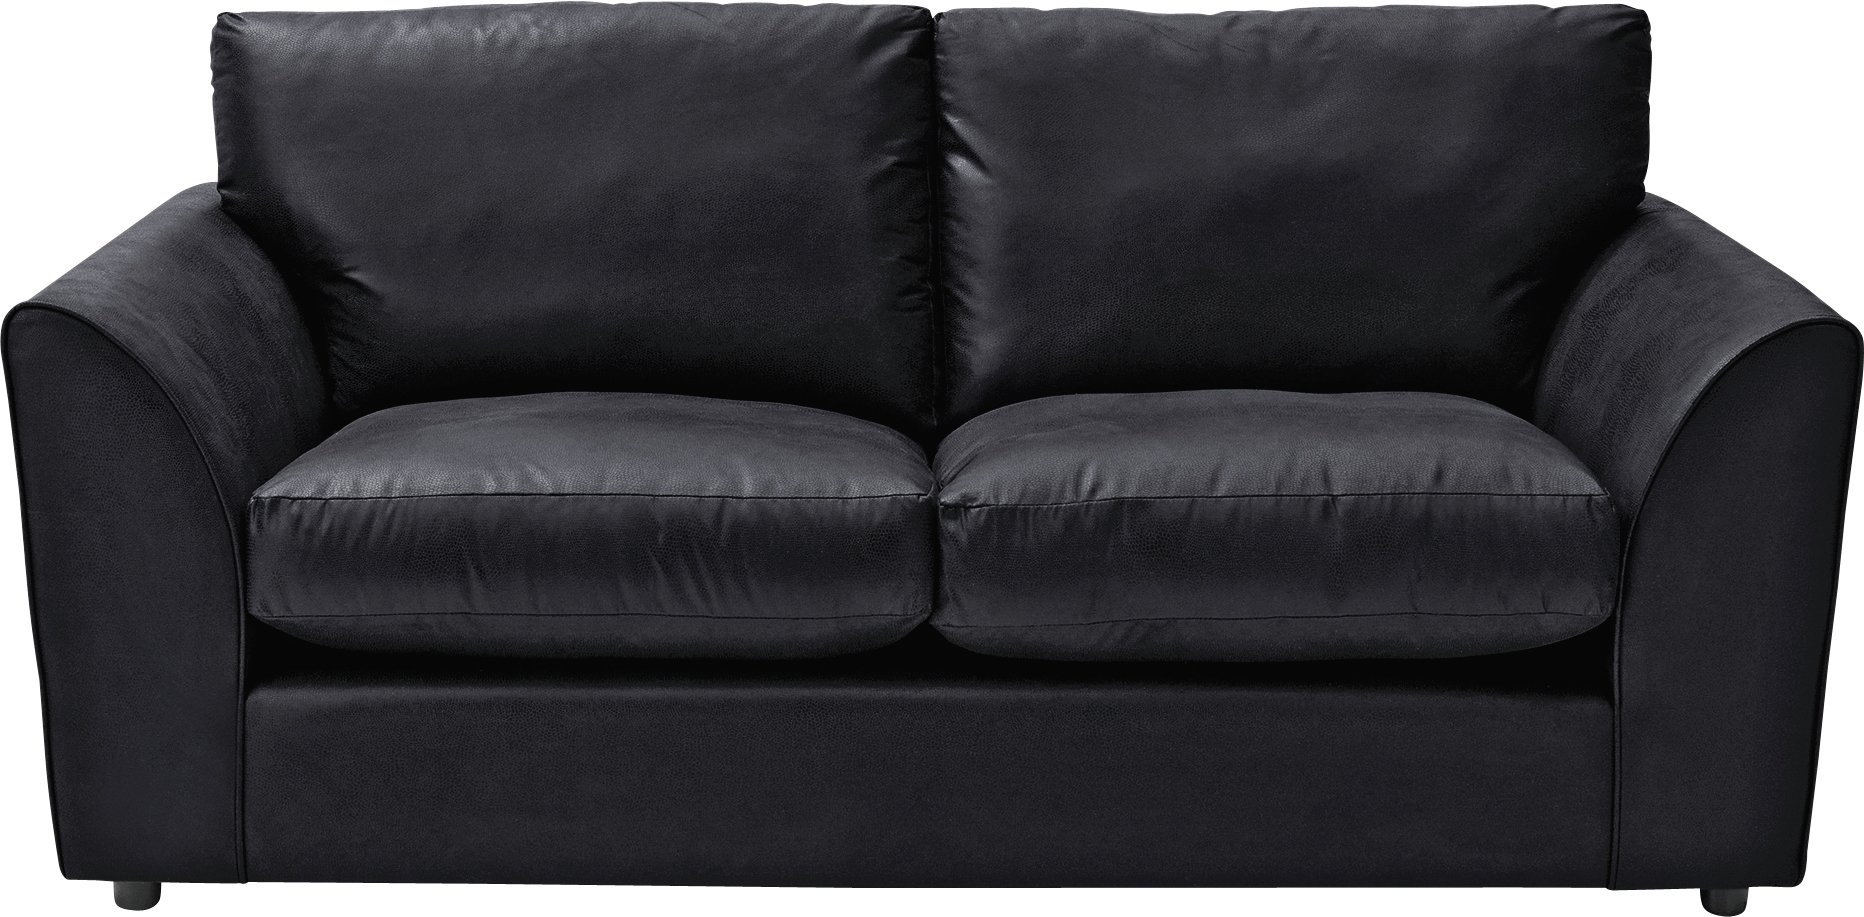 Argos Home New Alfie Compact 3 Seat Leather Eff Sofa - Black